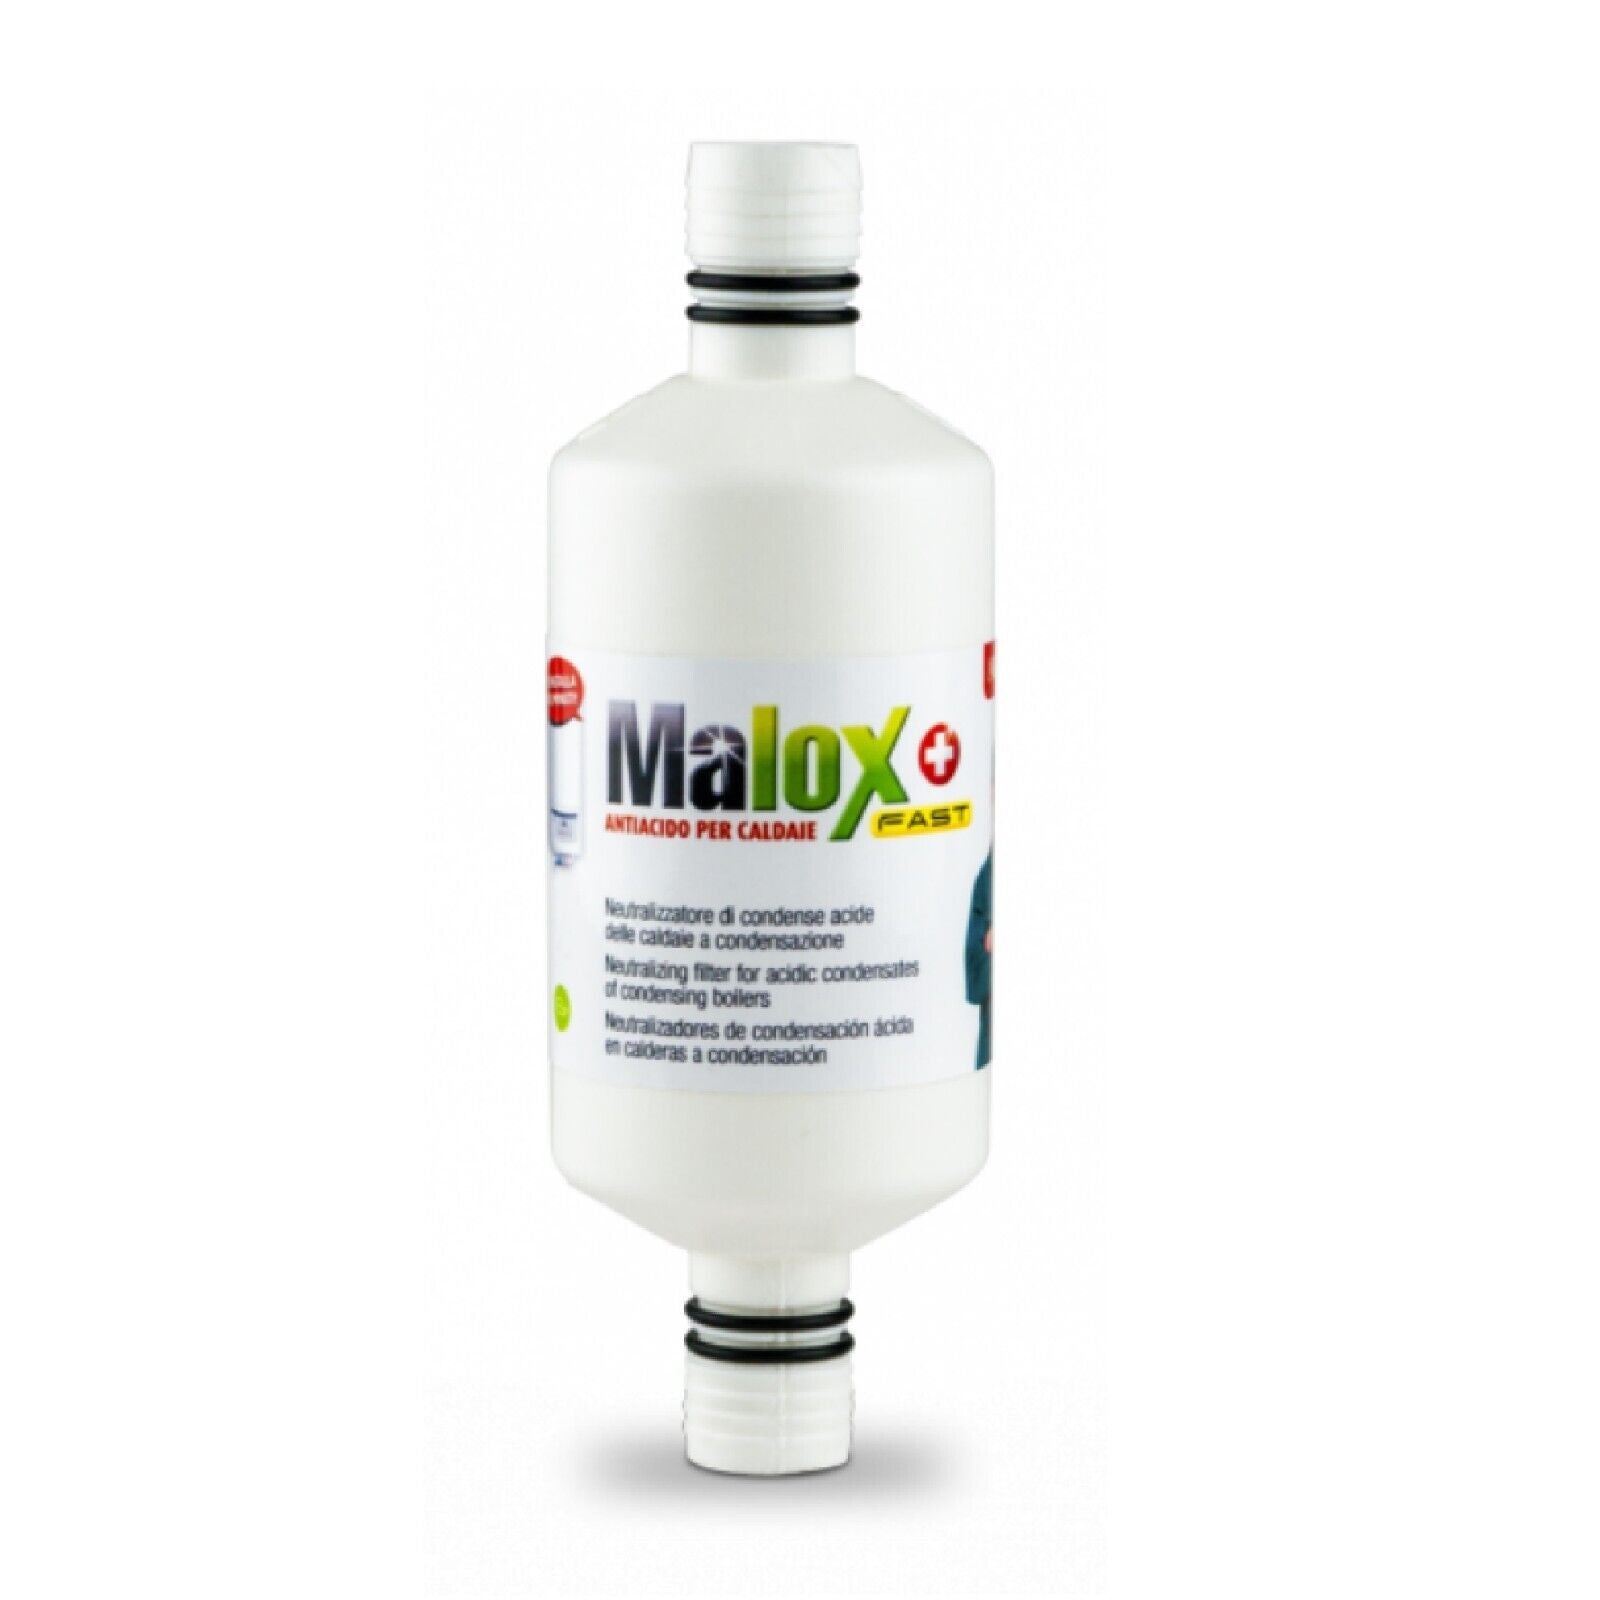 Filtro Neutralizzatore di condensa acida Gel Malox Fast cod. 101.091.96 per caldaie a condensazione